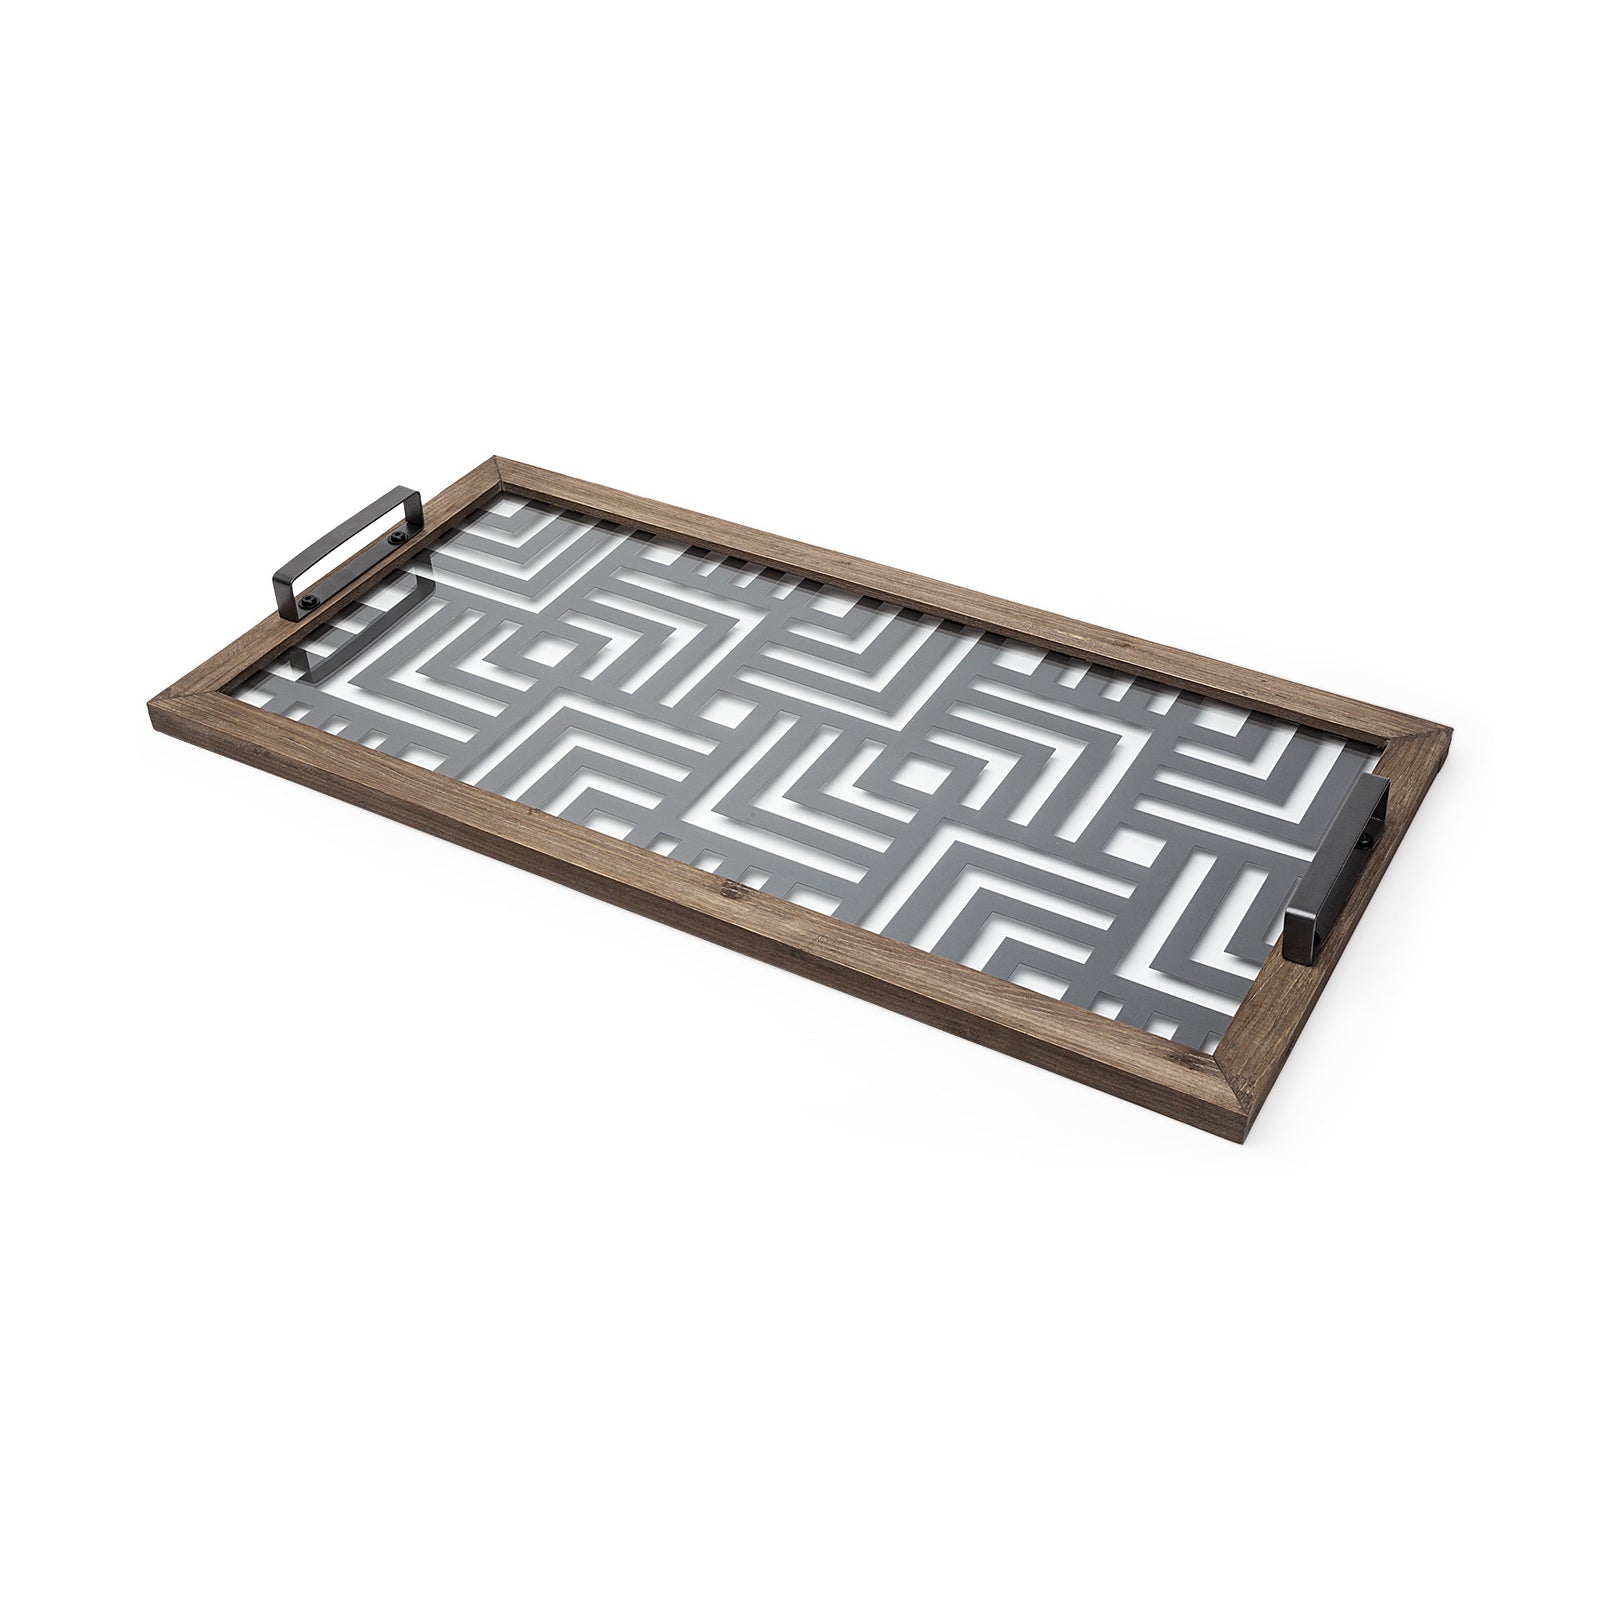 Grey Metal Glasss Top With Maze Like Pattern Tray